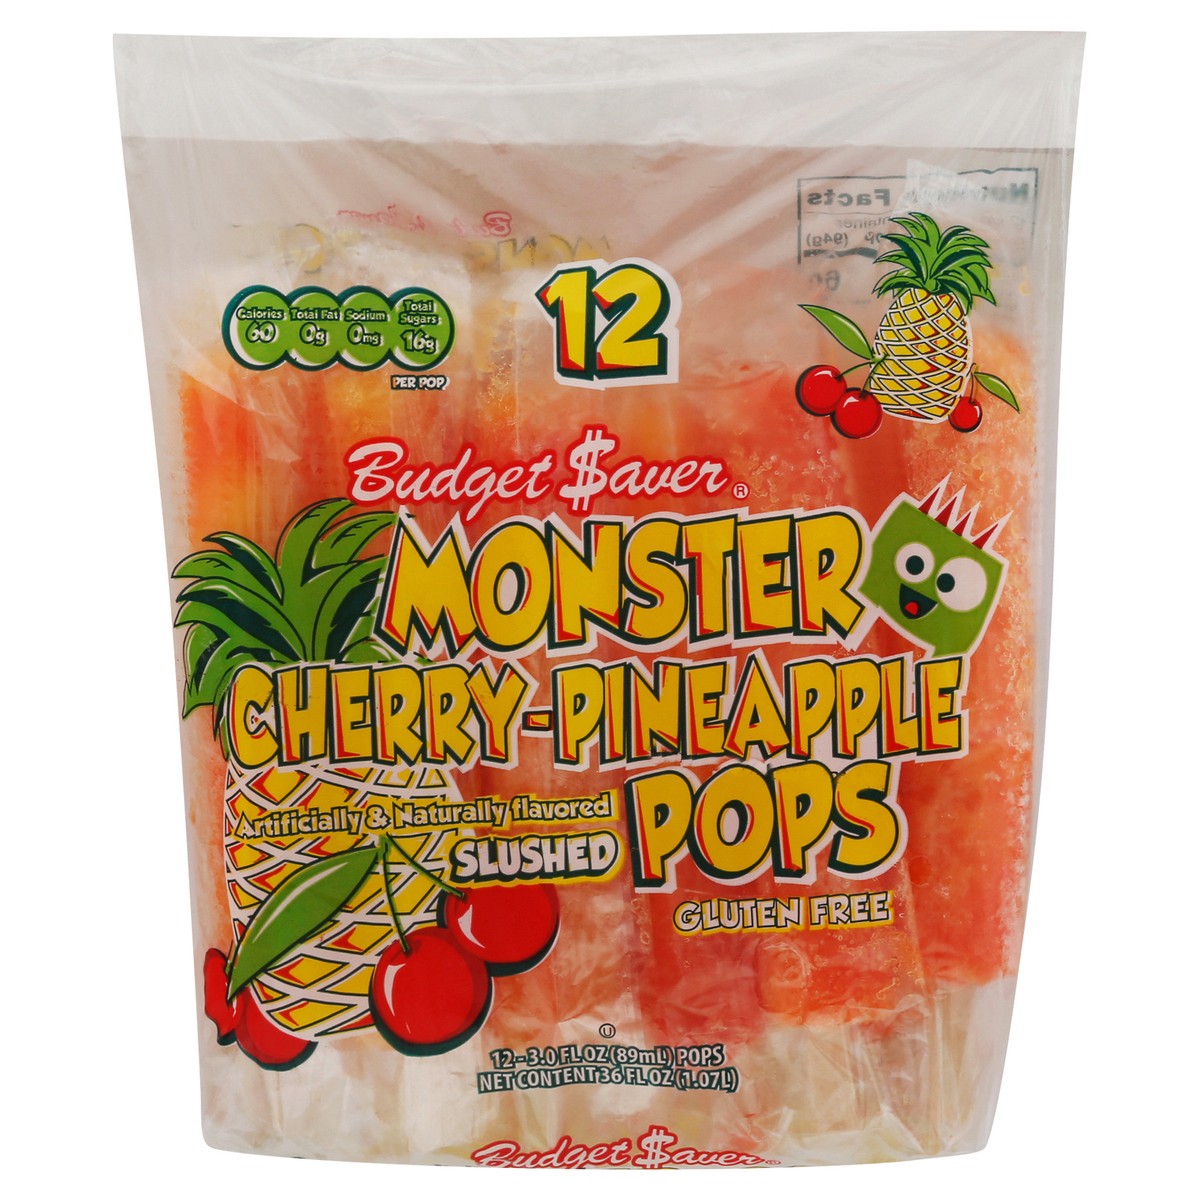 slide 1 of 9, Budget Saver Monster Pop Cherry Pineapple, 12 ct